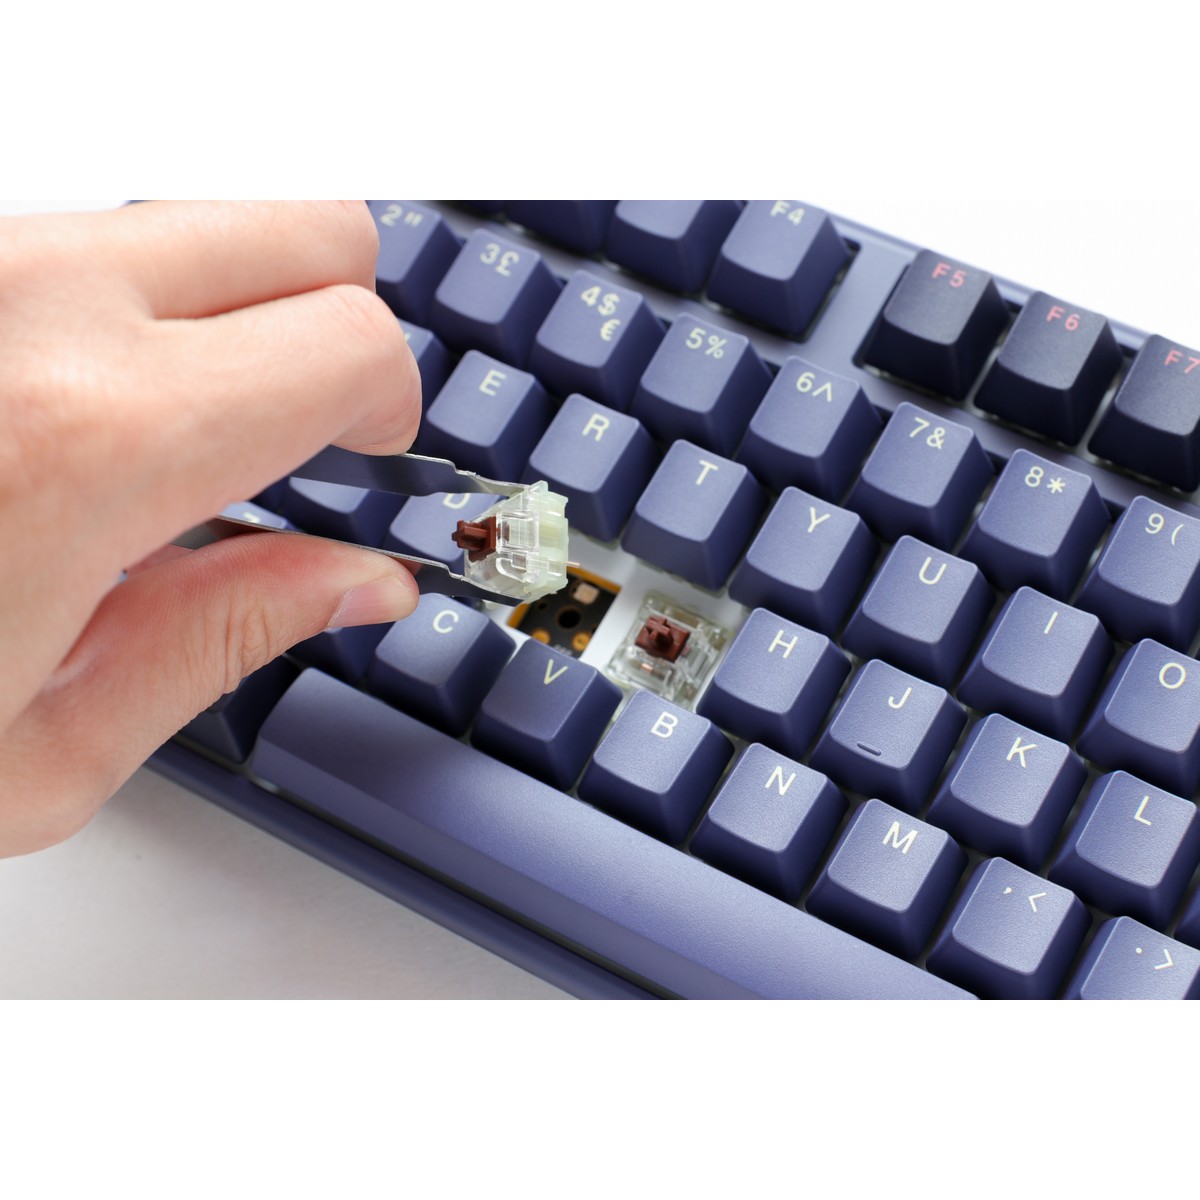 Ducky - Ducky One 3 Cosmic USB RGB Mechanical Gaming Keyboard Cherry MX Blue Switch - UK Layout